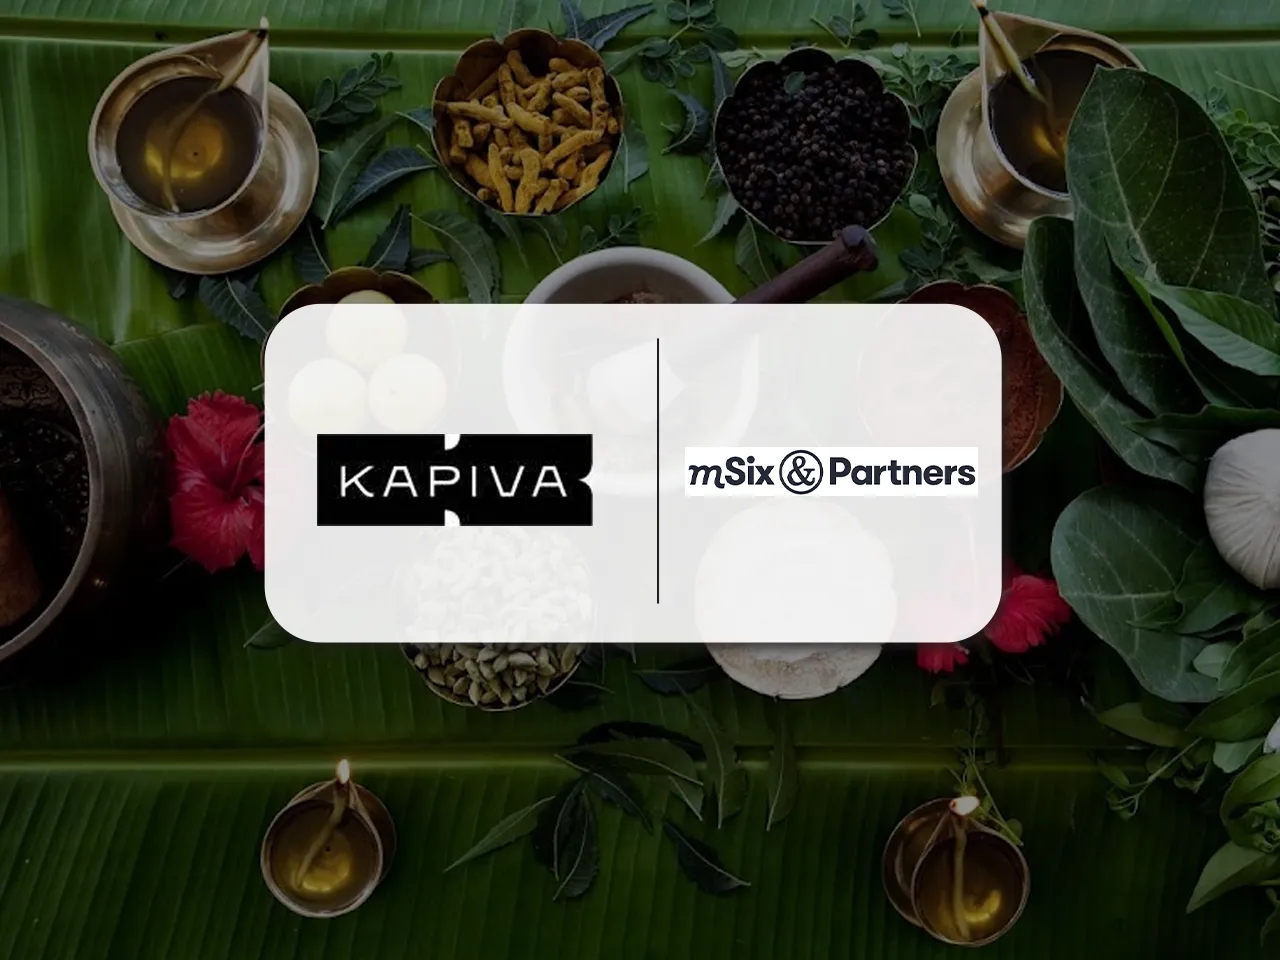 mSix&Partners wins the integrated media mandate for Kapiva